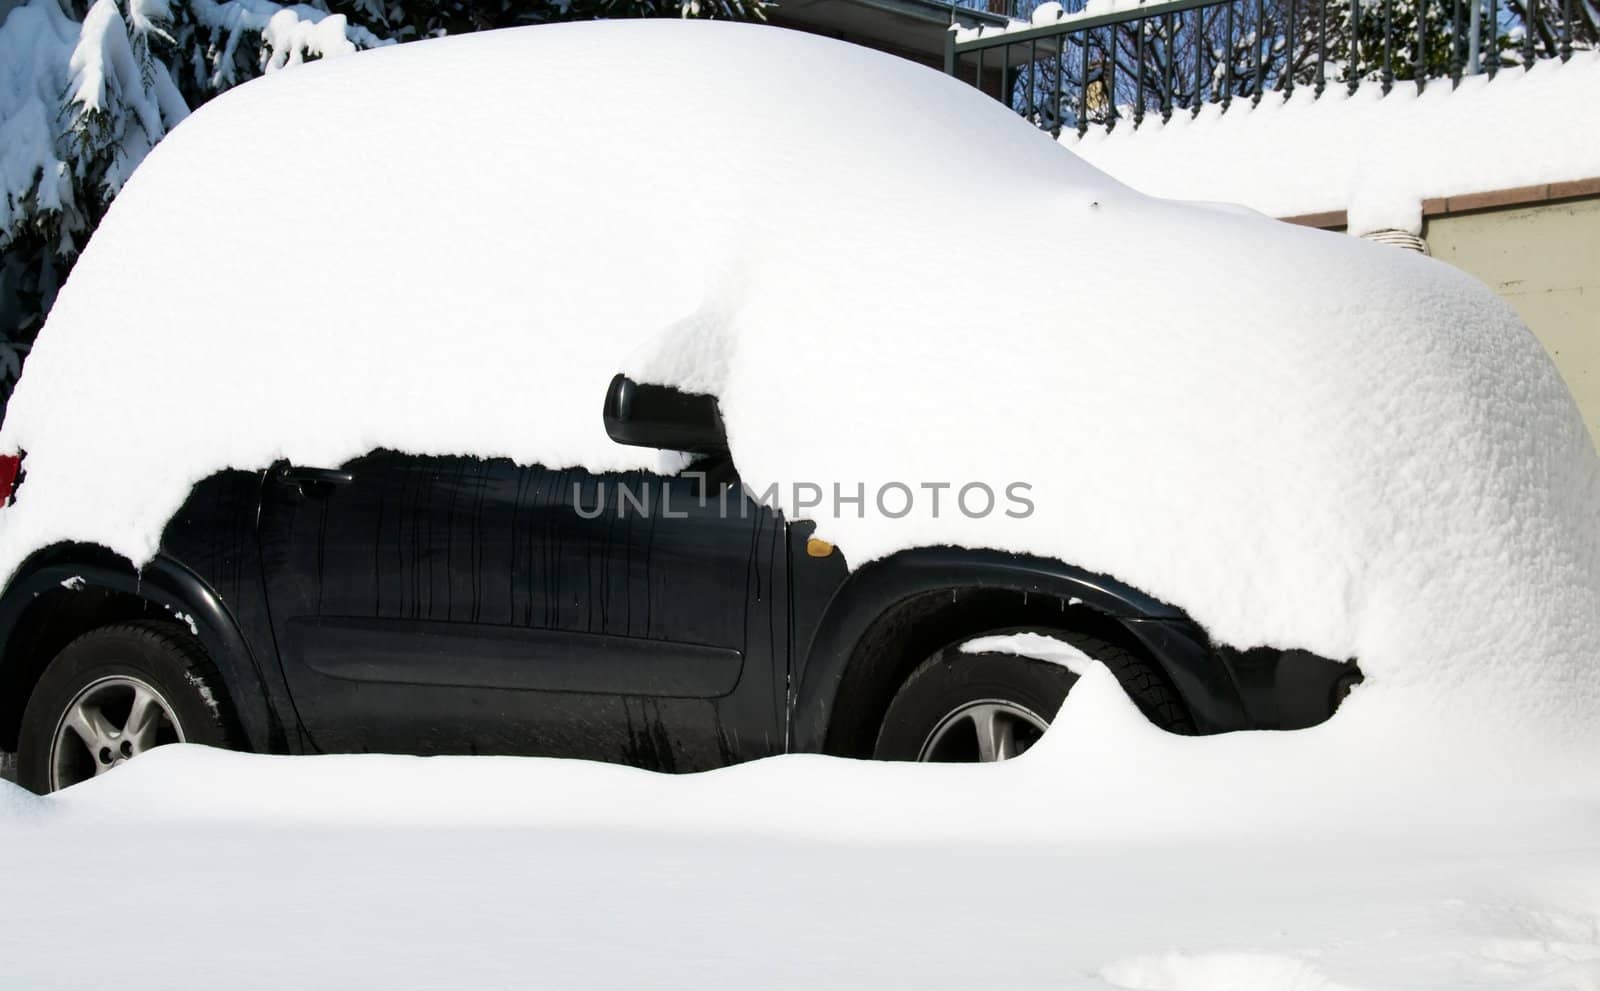 Car hidden in snow by baggiovara